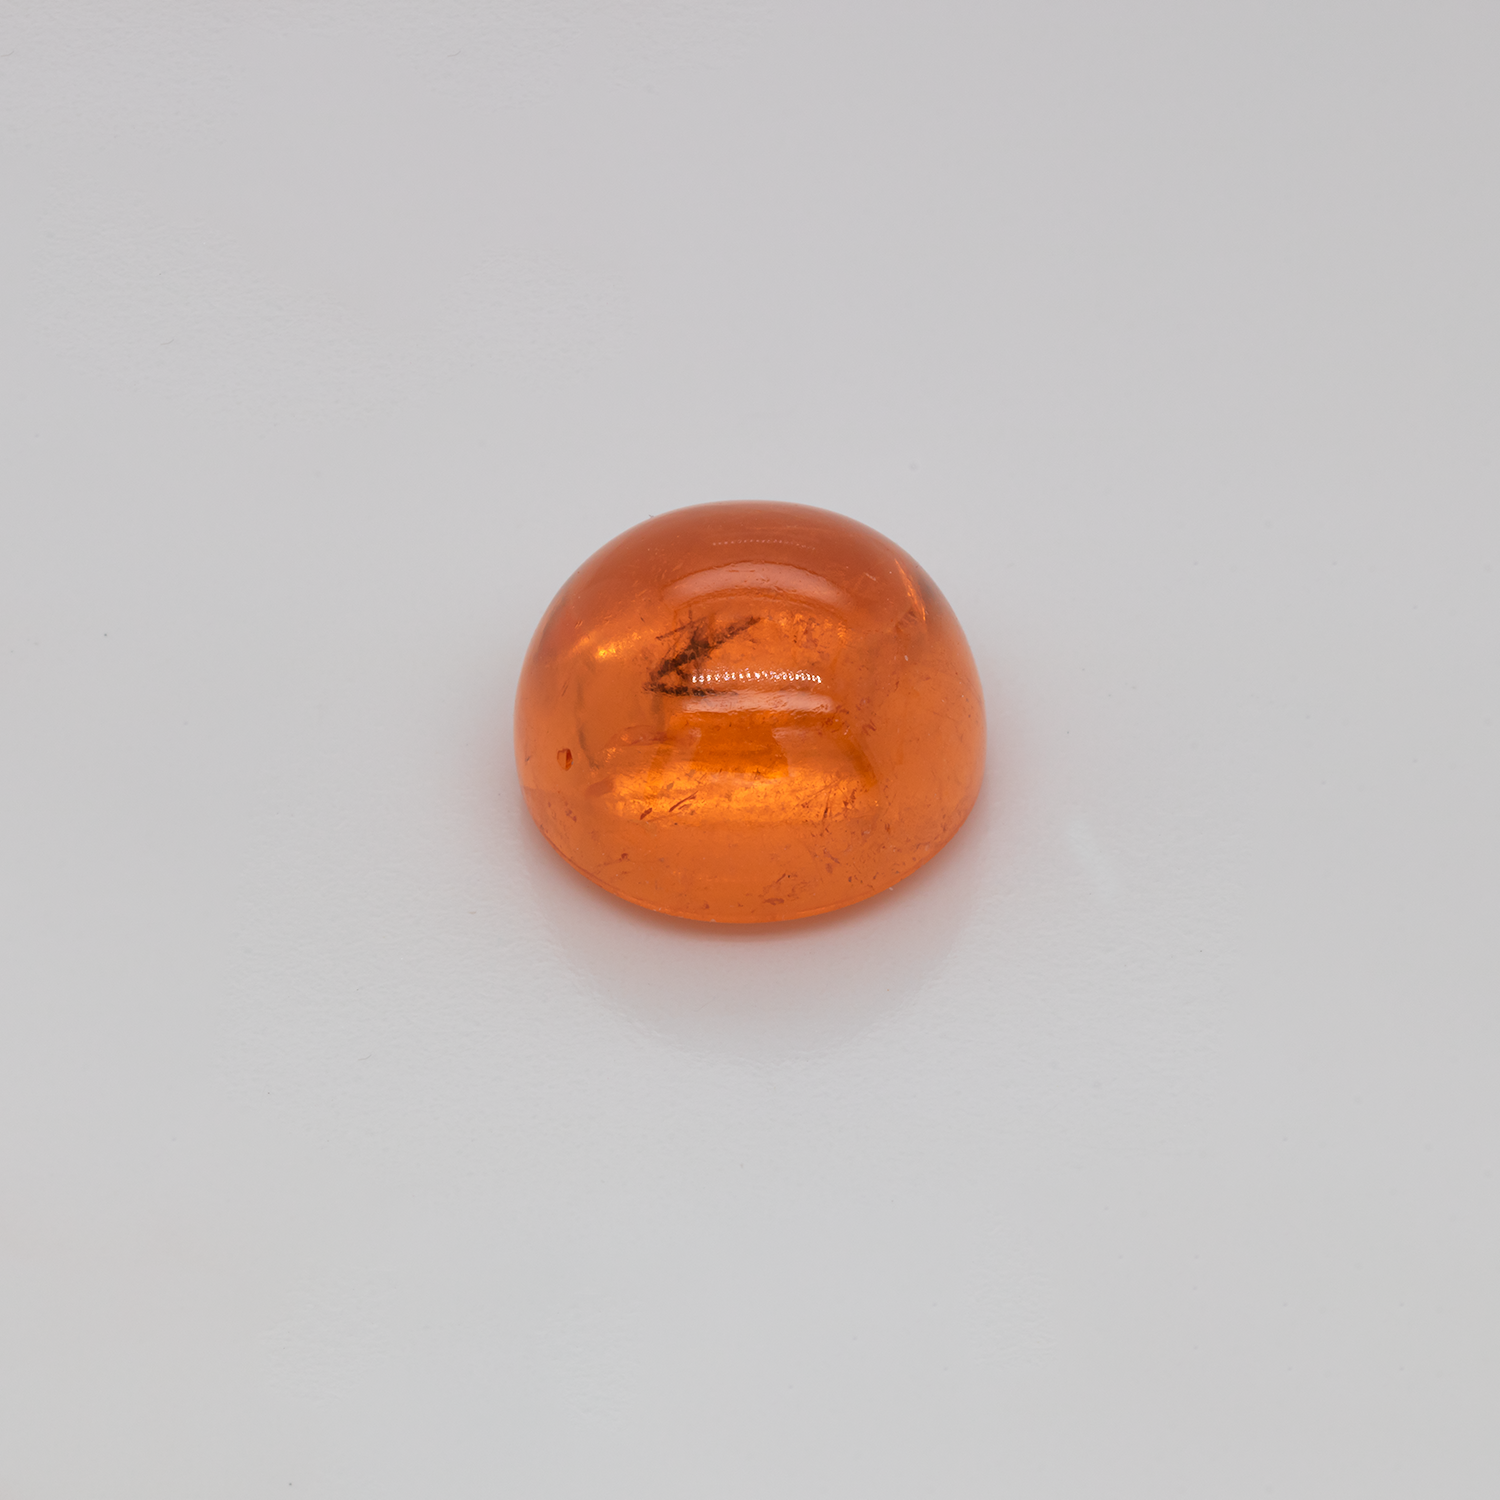 Mandarin Garnet - orange, round, 13x13 mm, 16.23 cts, No. MG99056